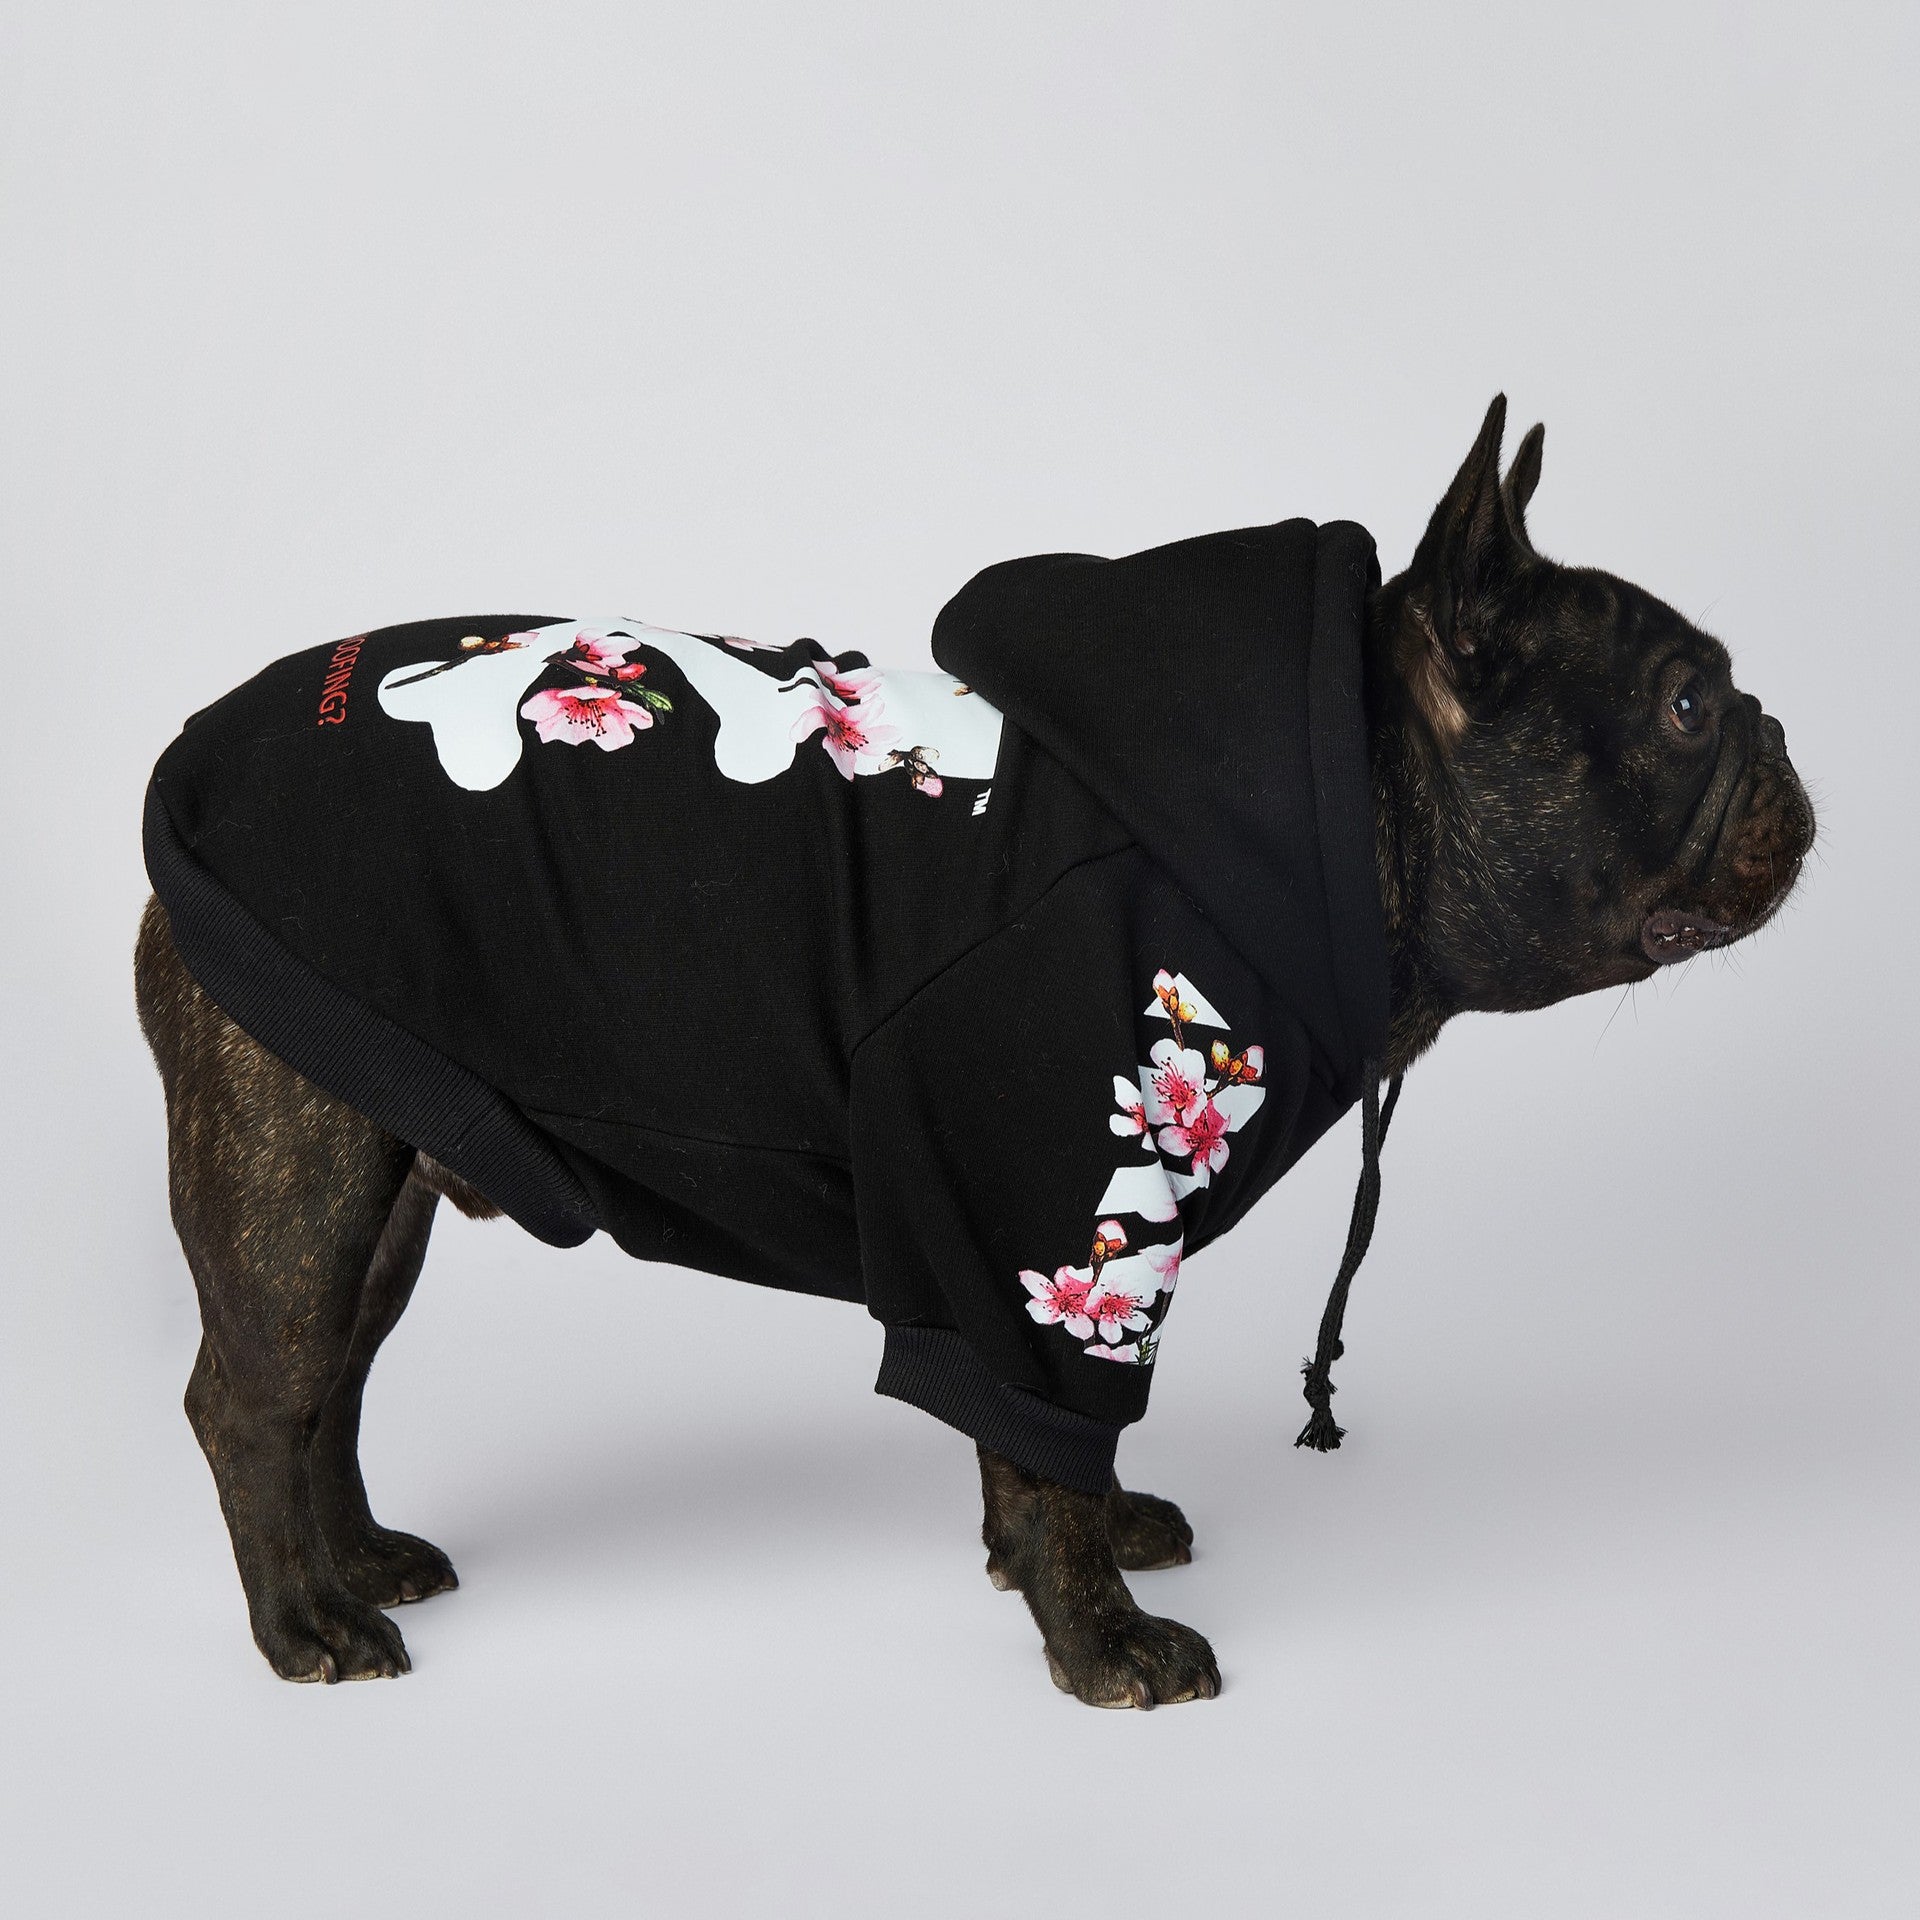 French Bulldog Woof Sakura Hoodie Dog Cloth